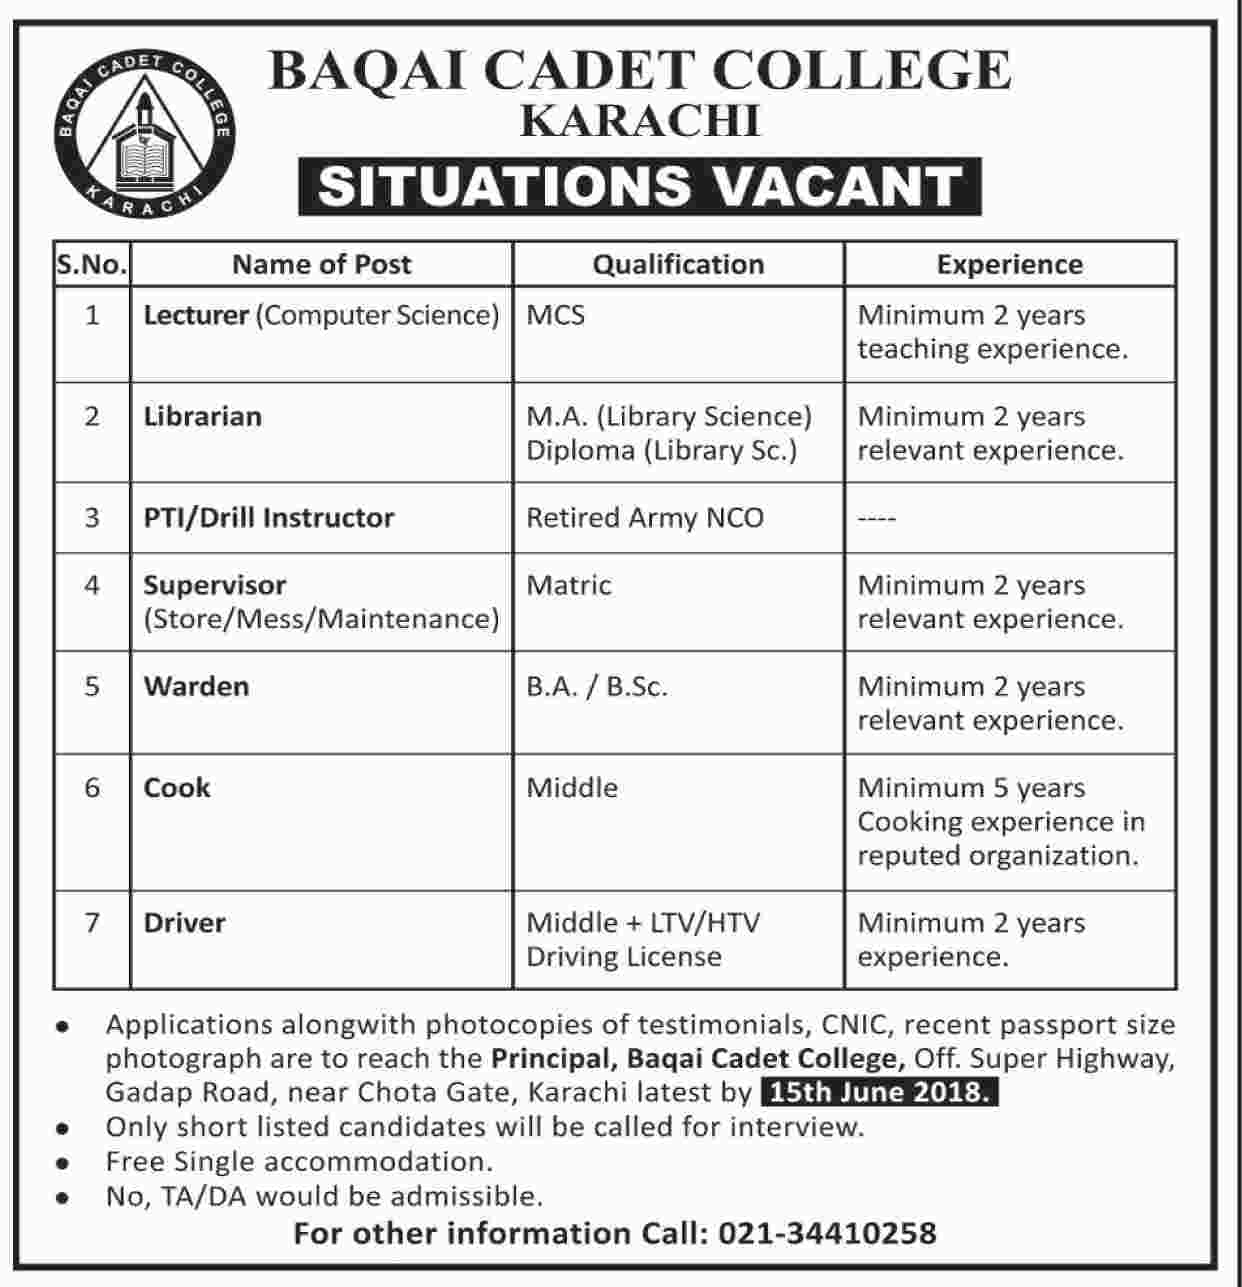 Jobs in Baqai Cadet College 03 June 2018